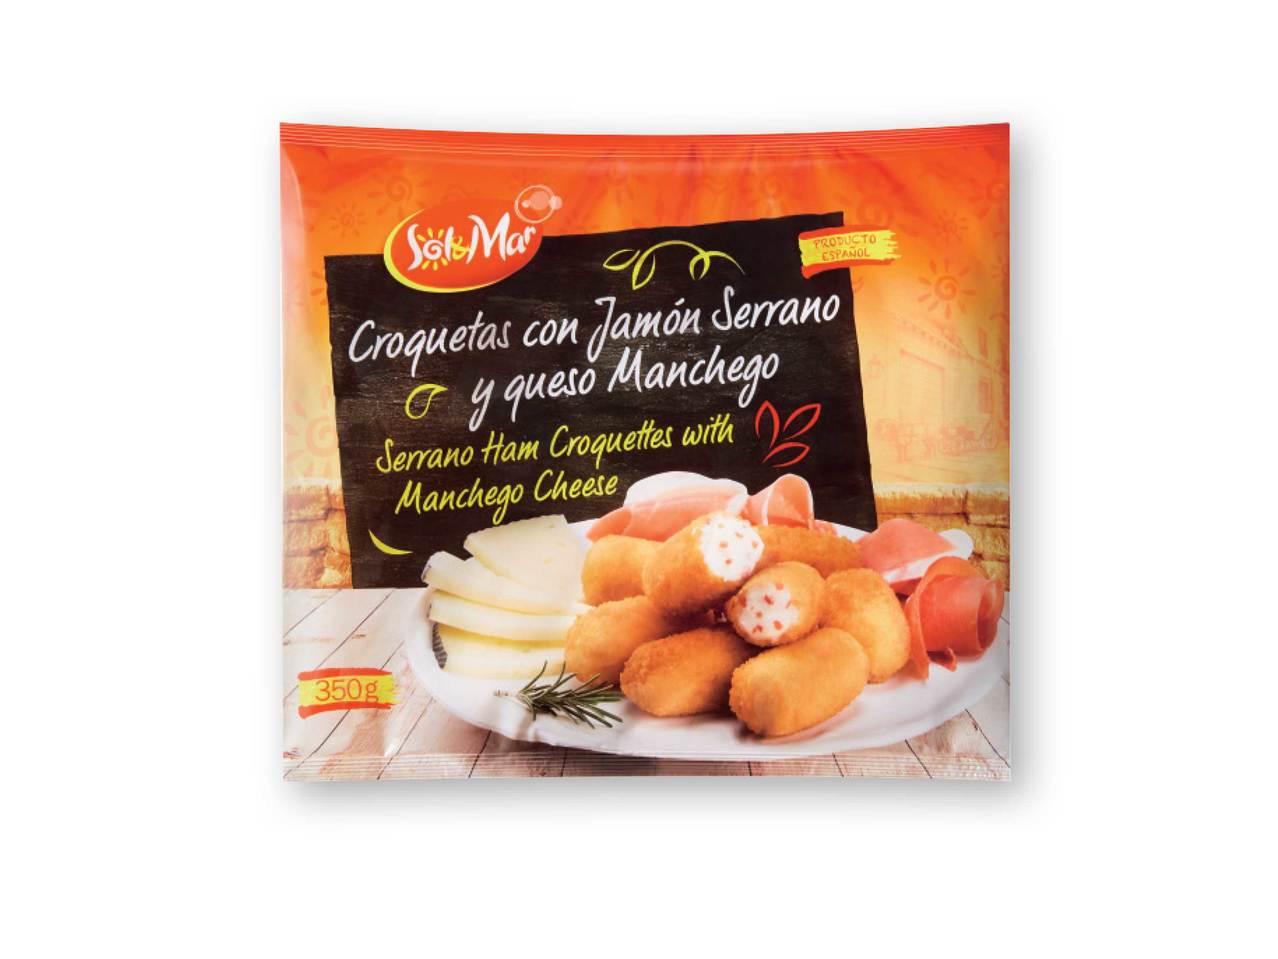 SOL & MAR Serrano Ham Croquettes with Manchego Cheese